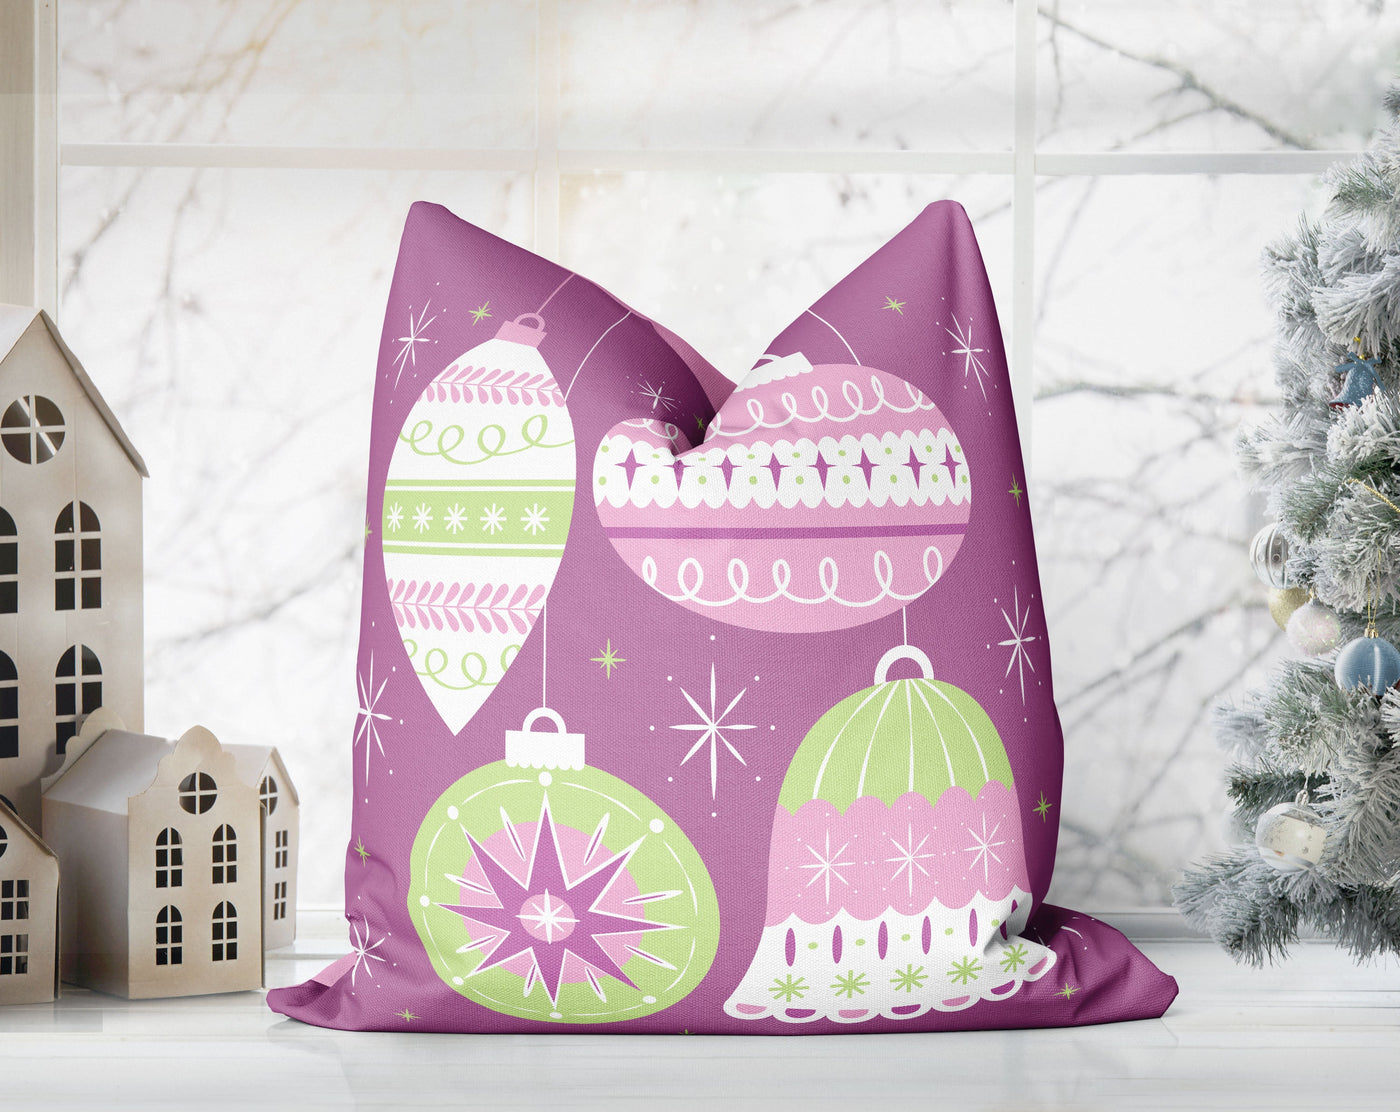 Classical Ornaments Christmas Lavender Purple Pillow Throw - Cush Potato Pillows